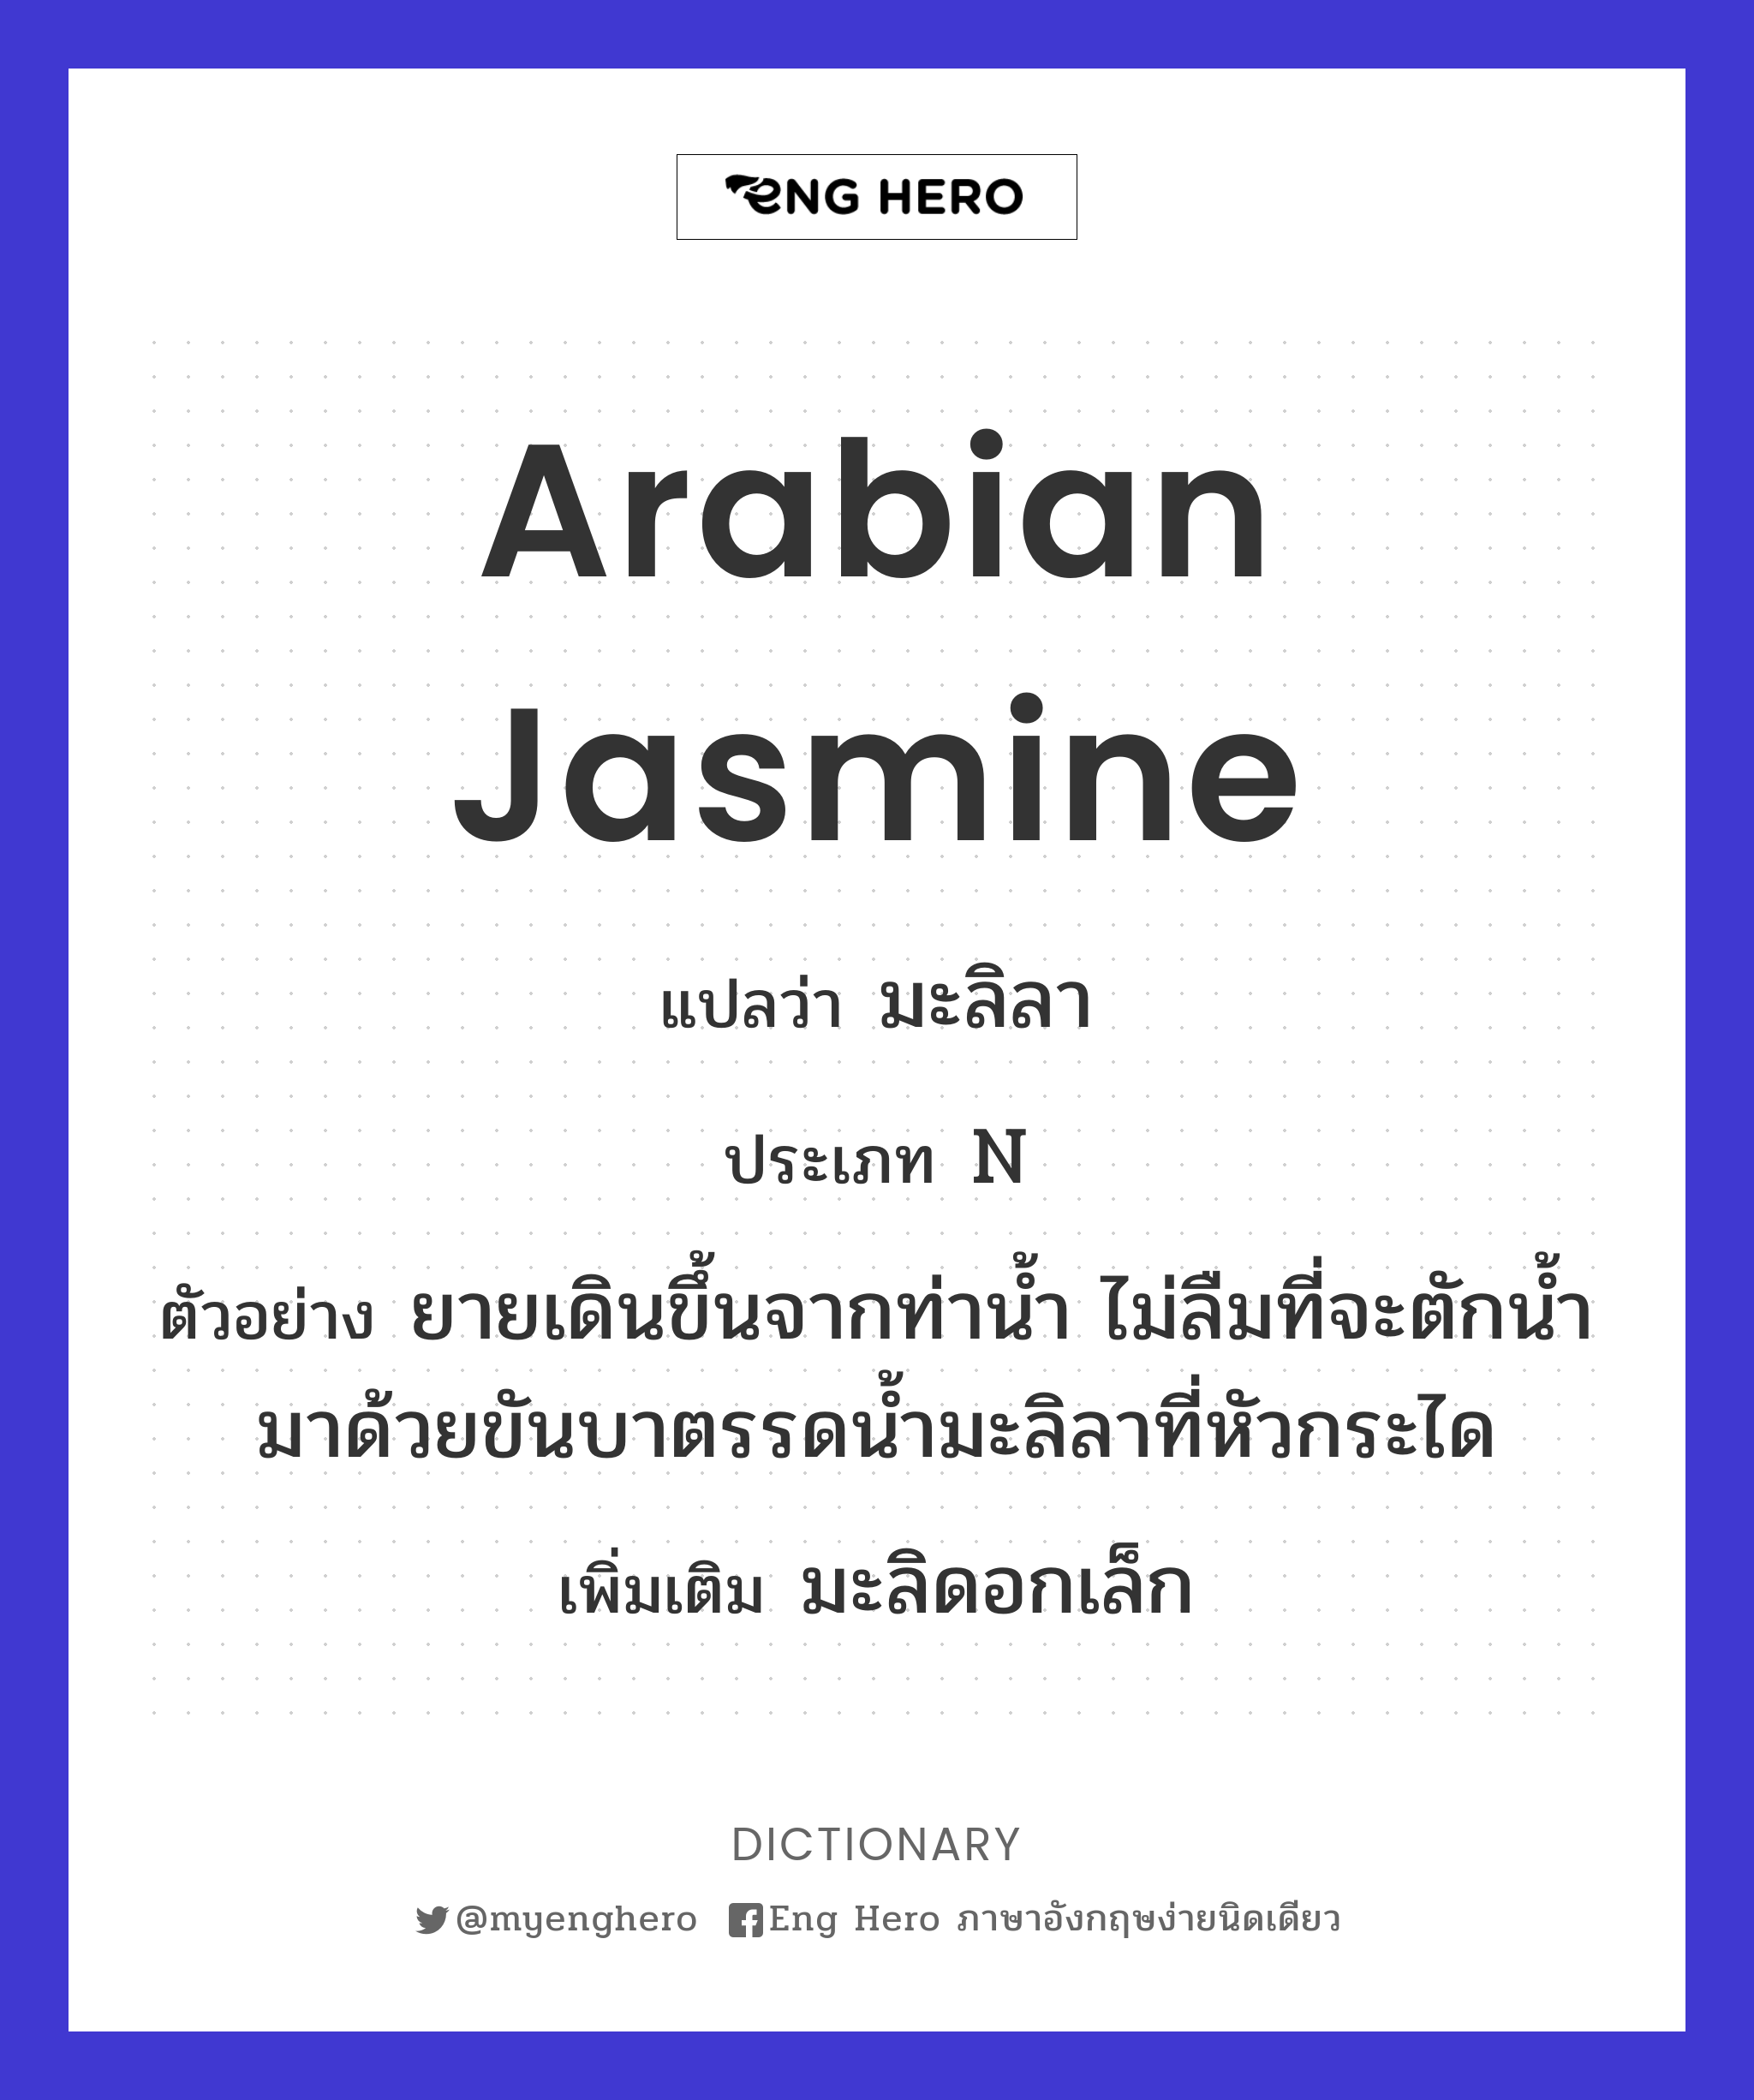 Arabian jasmine